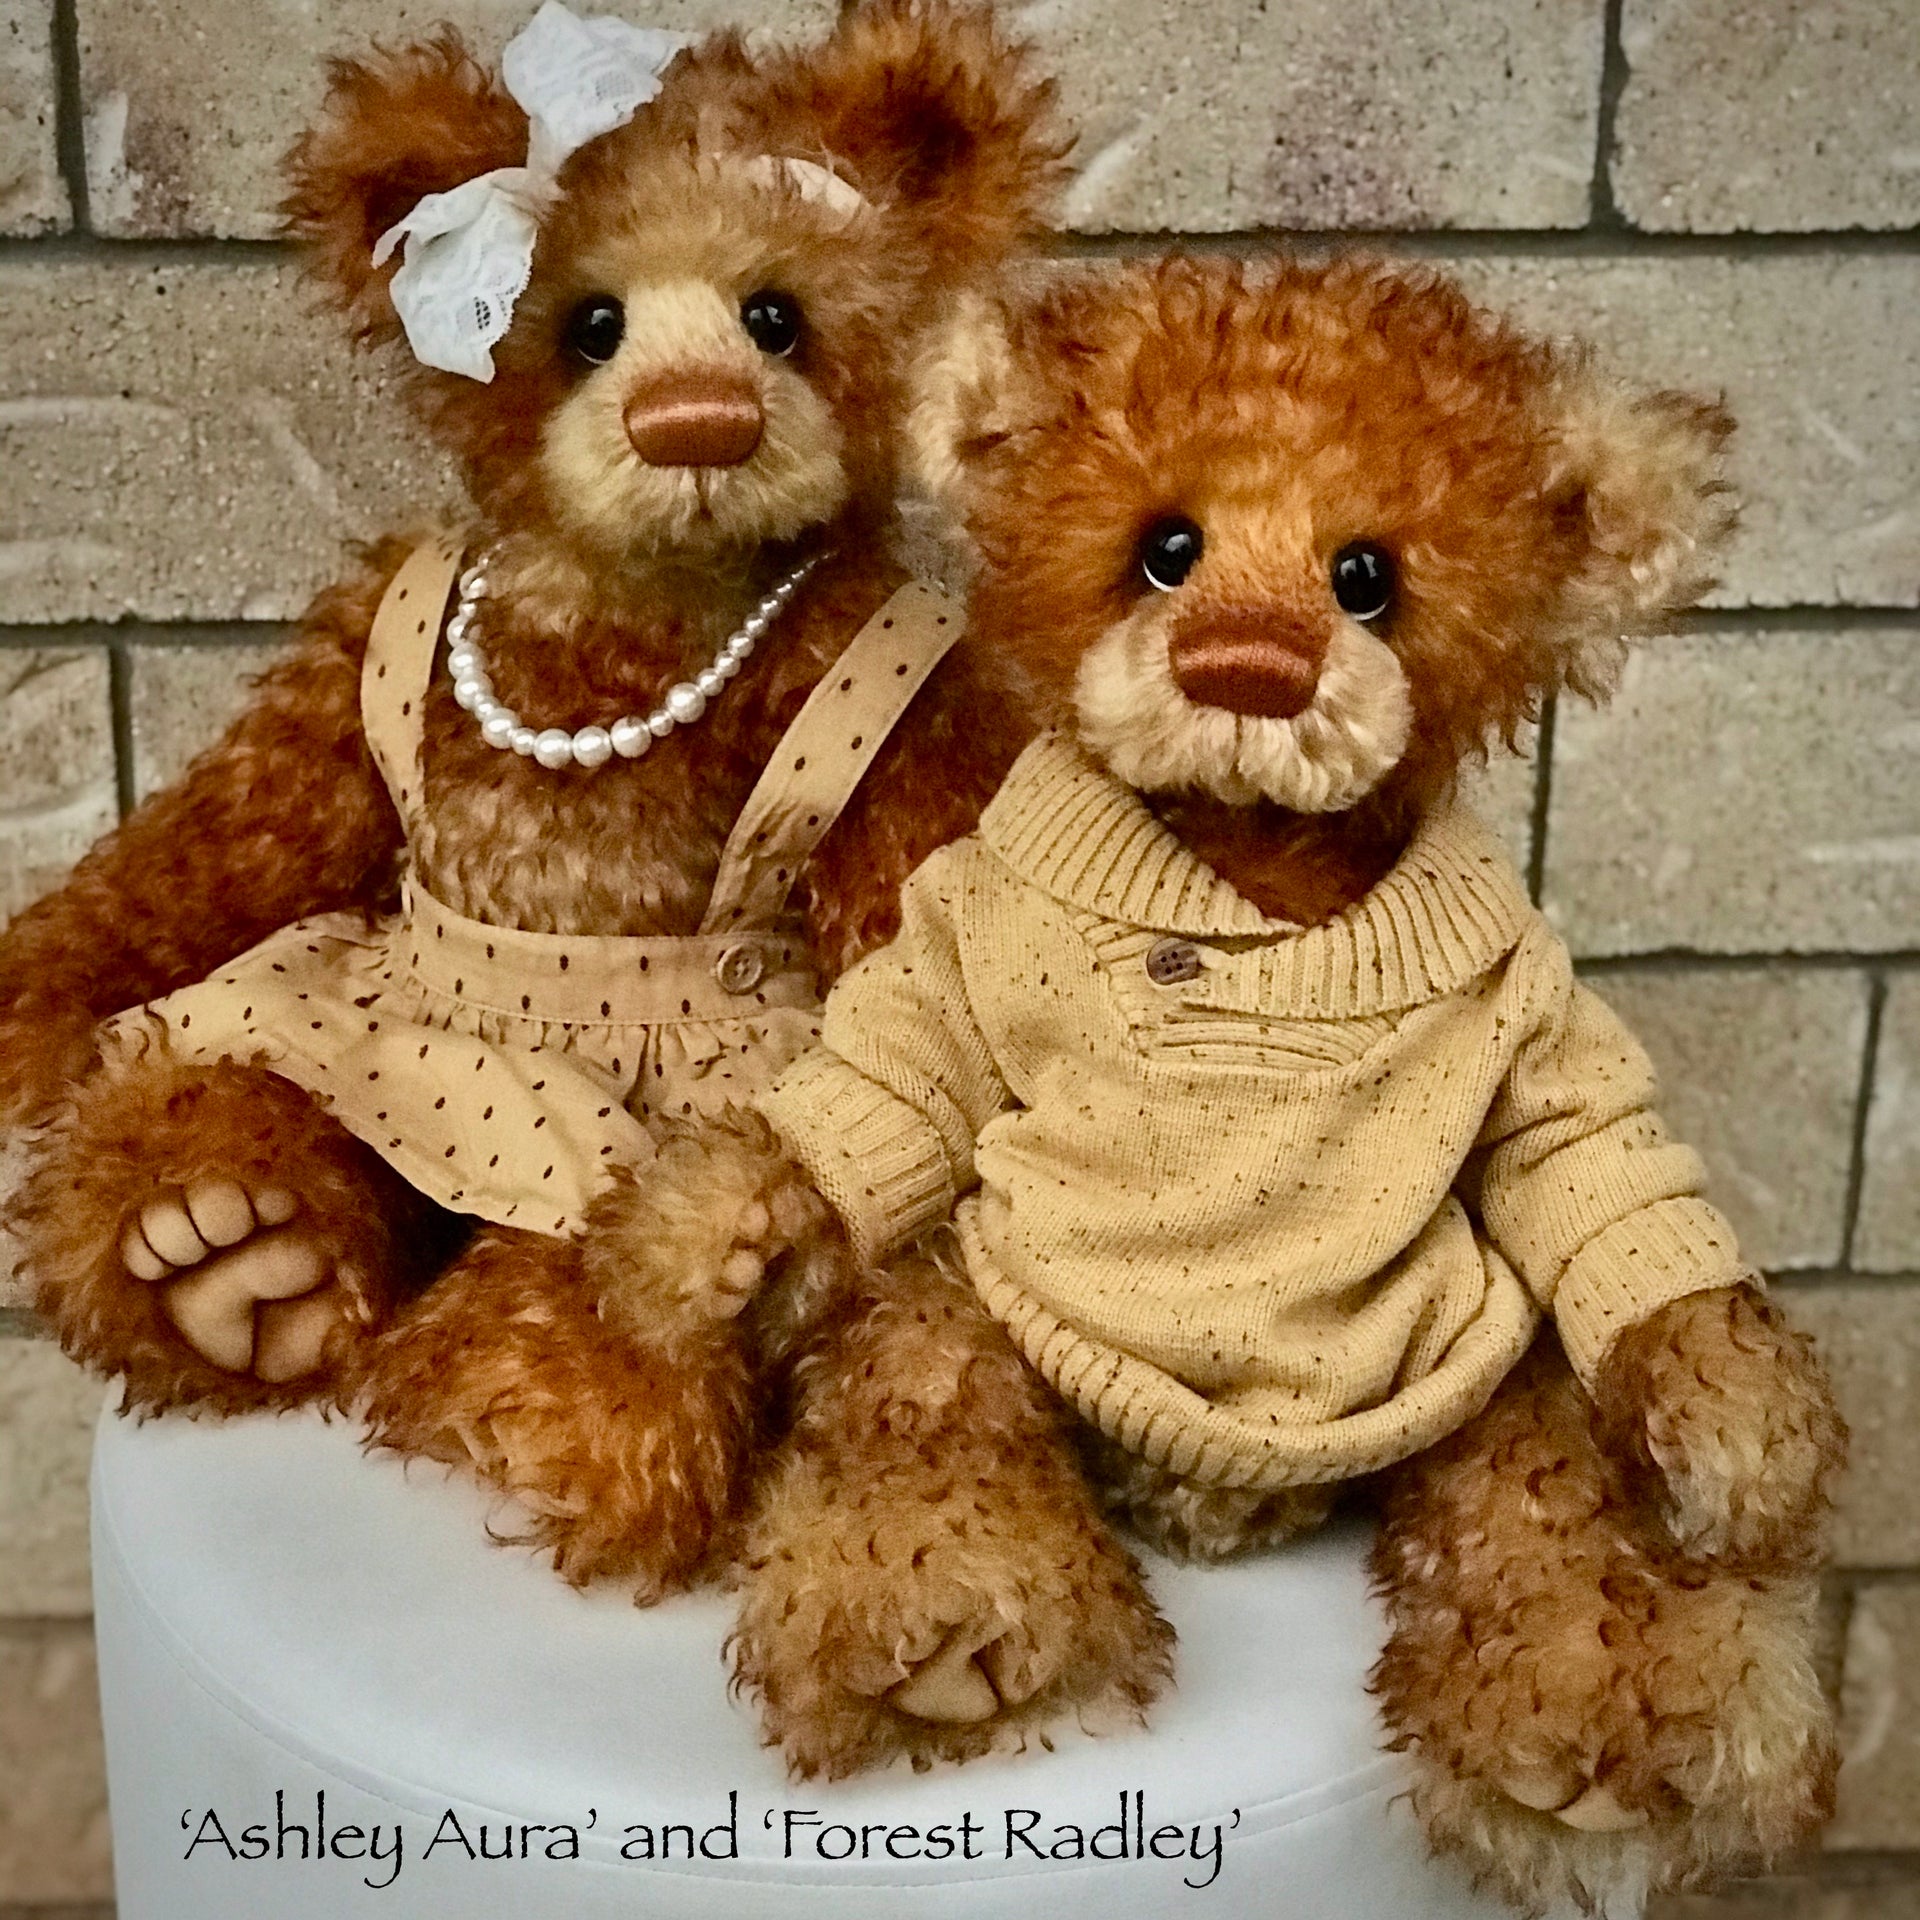 Forest Radley - 18" Hand Dyed Mohair Toddler Artist Bear by Emma's Bears - OOAK